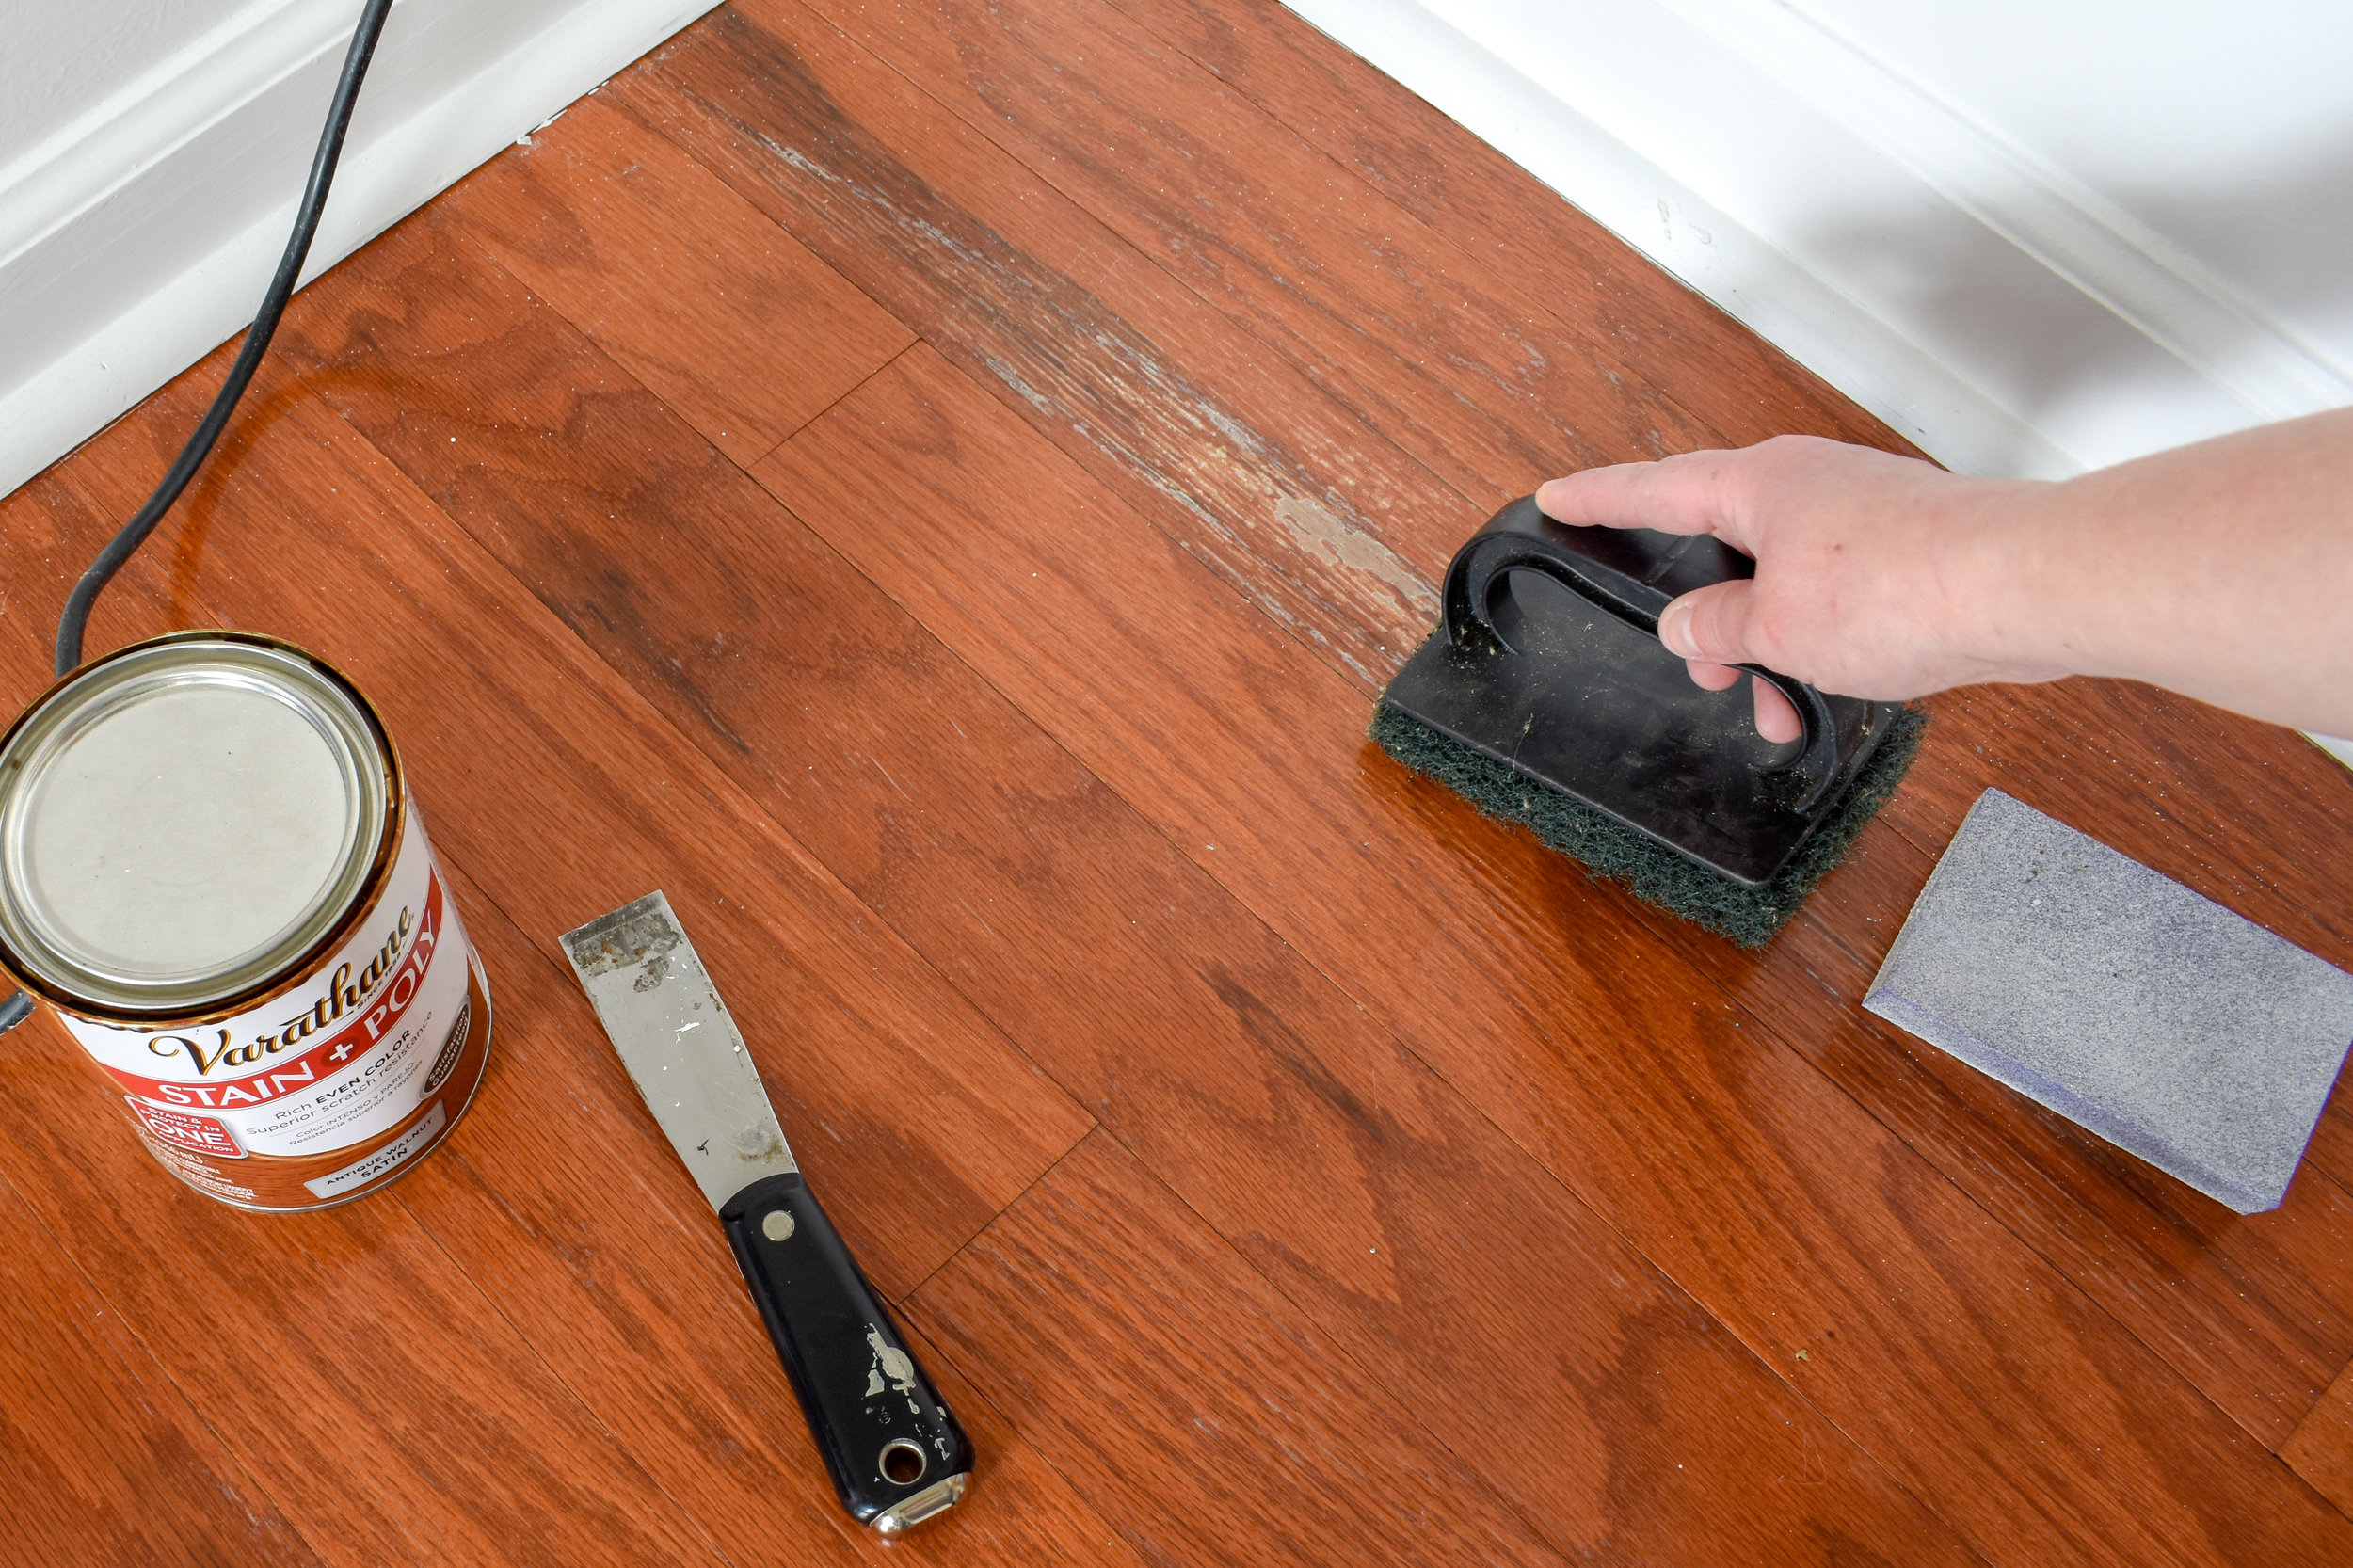 How To Make Old Hardwood Floors Shine, Shining Up Hardwood Floors